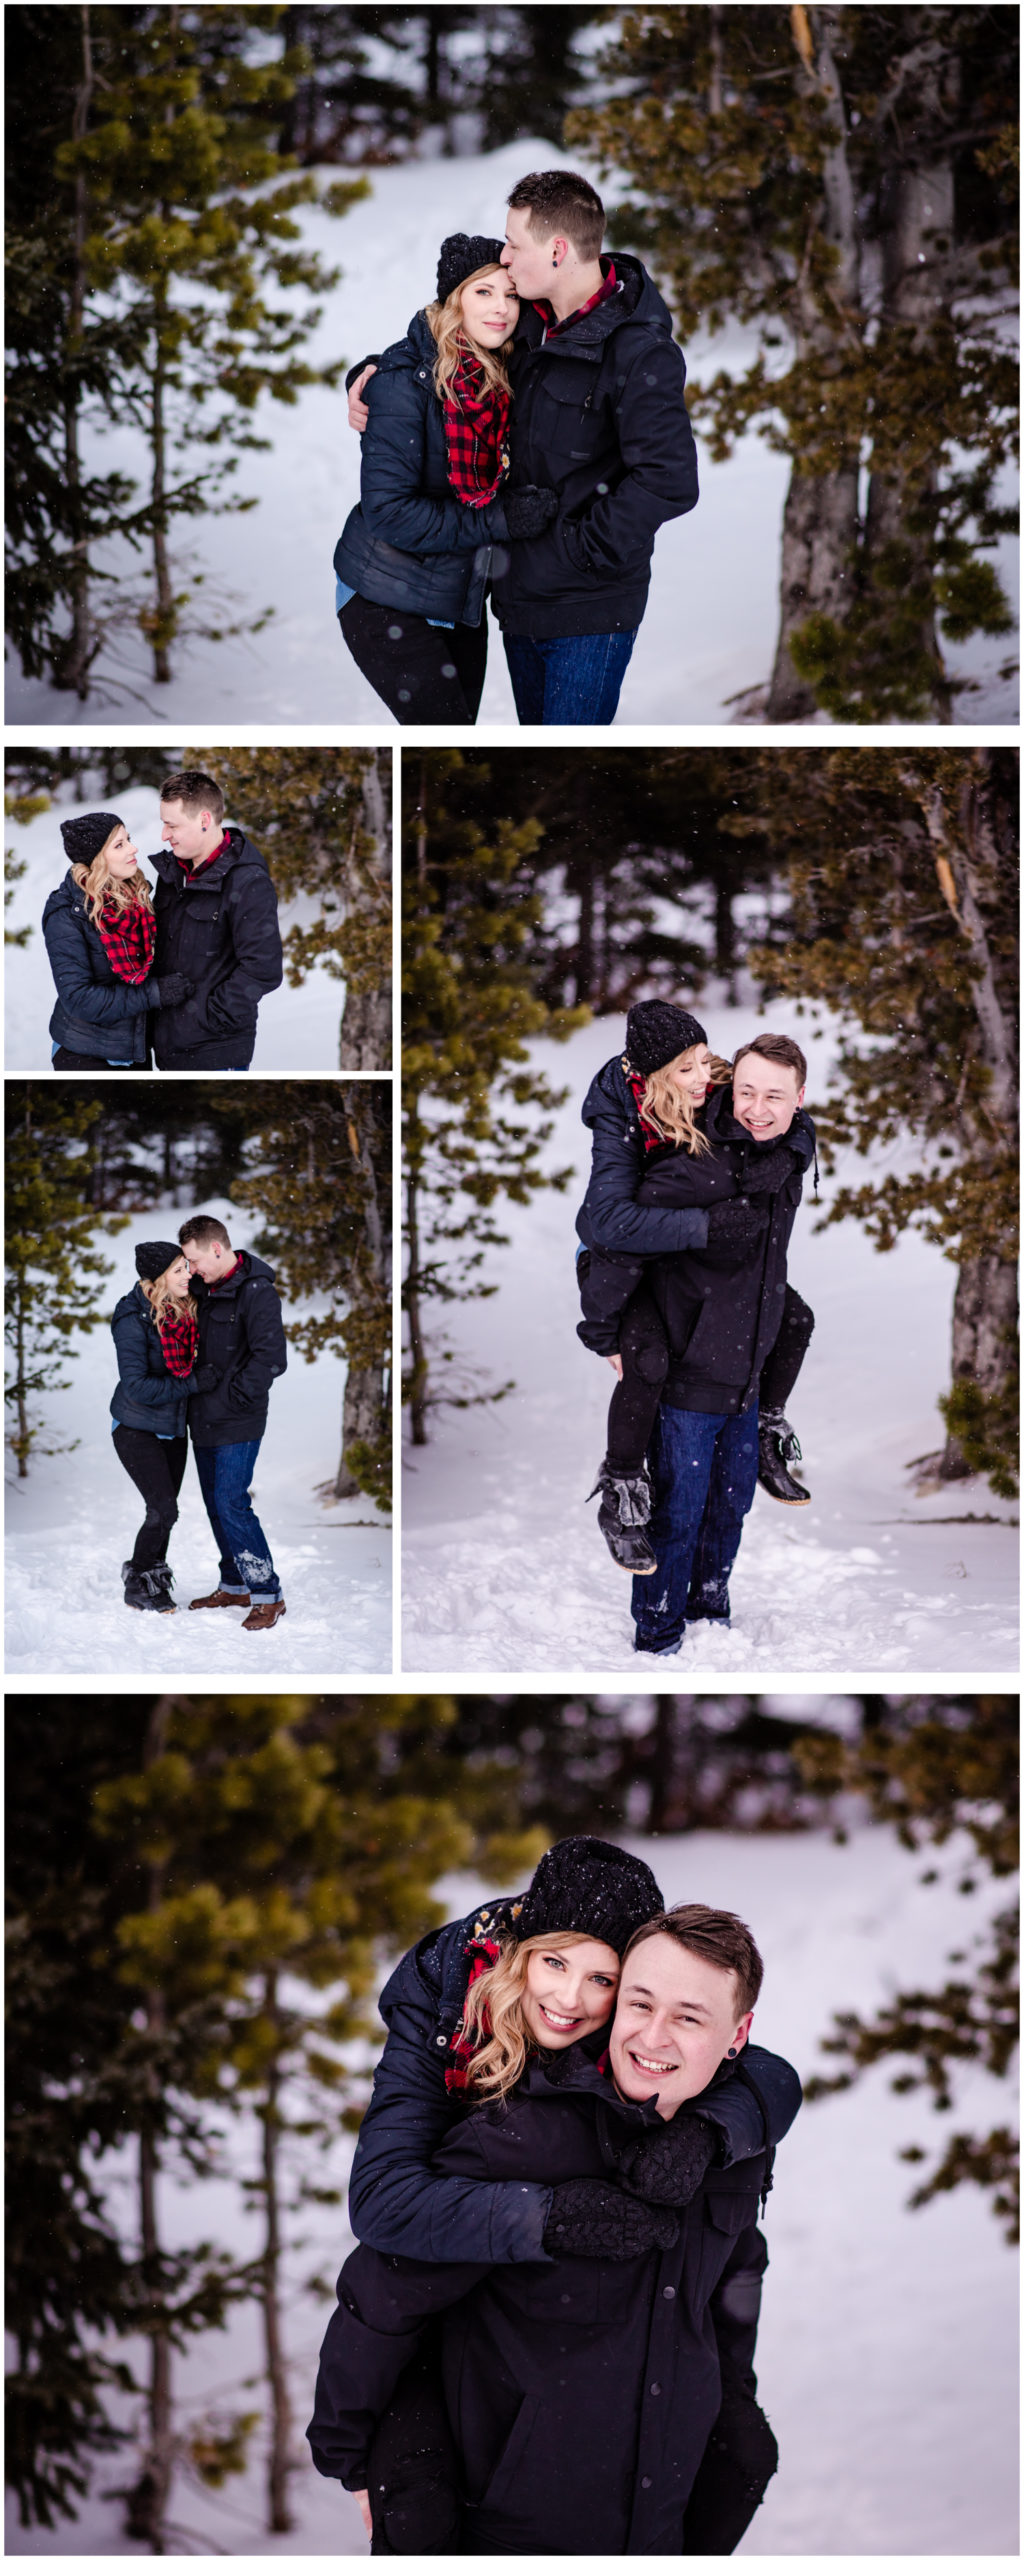 Brainard Lake Engagement | Colorado Mountains | Britni Girard Photography - Wedding and Engagement Photographers - Snowy engagement in rocky mountains